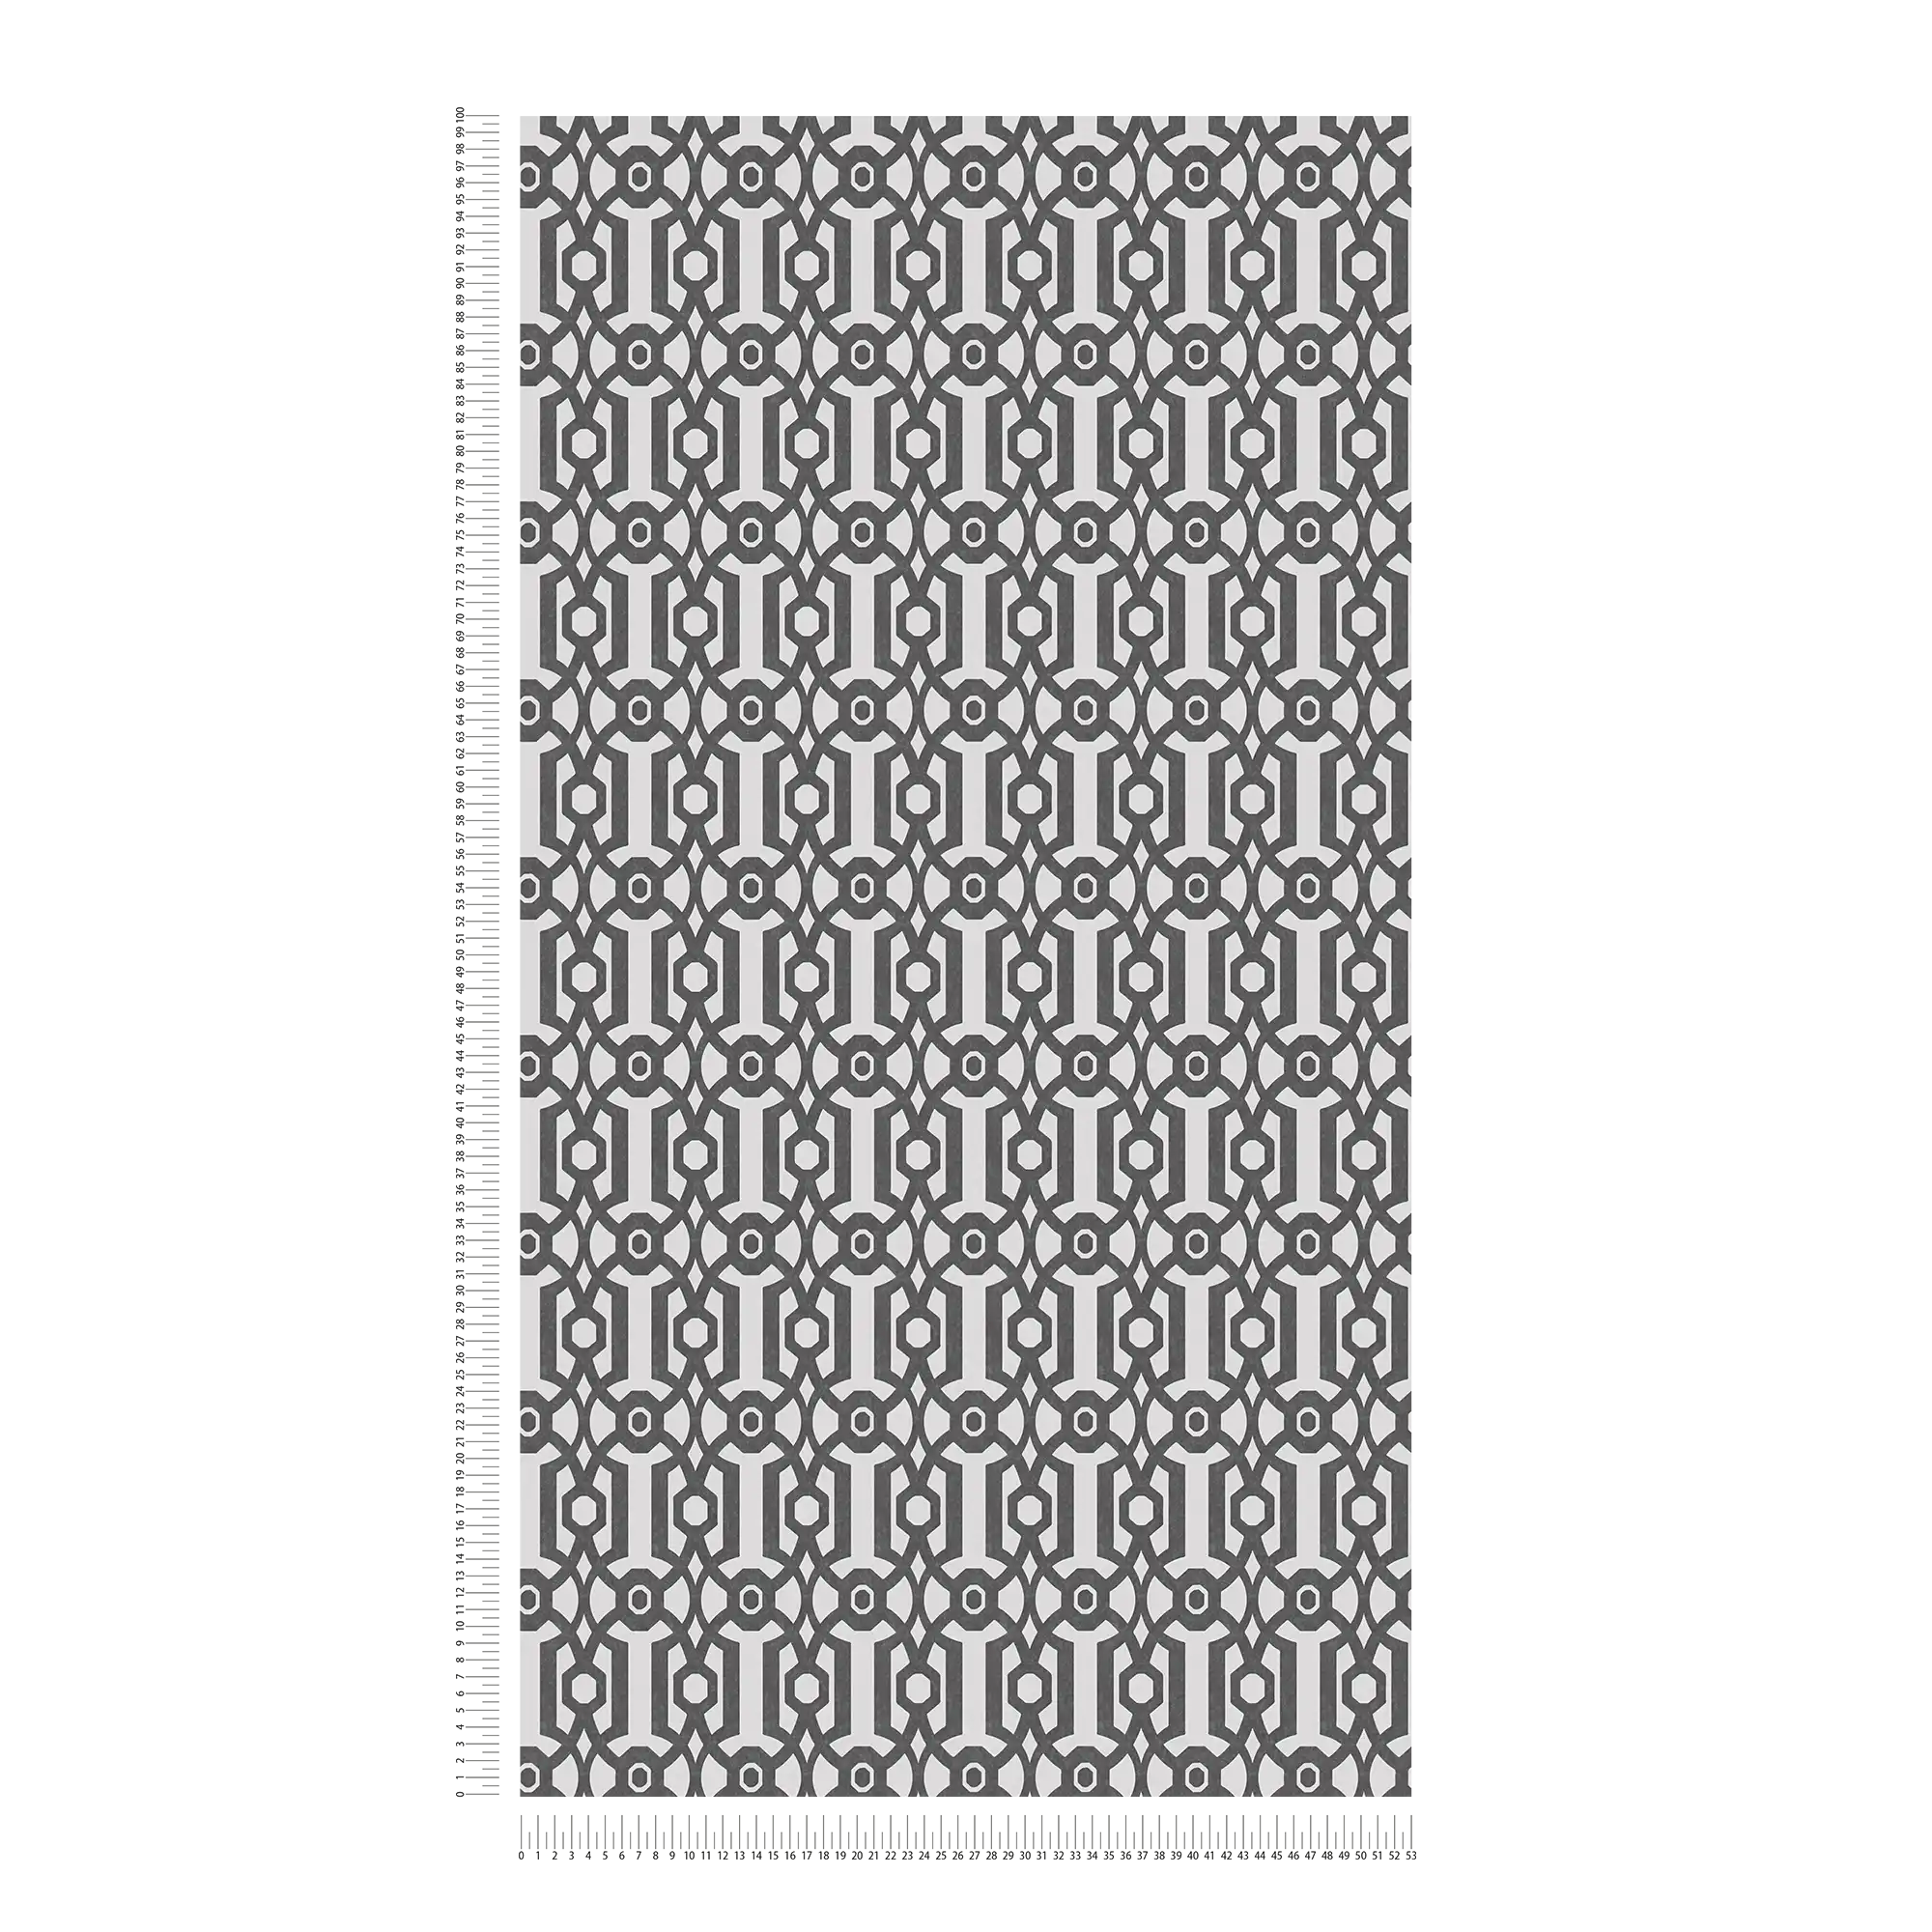             Papel pintado no tejido con patrón gráfico moderno - negro, blanco
        